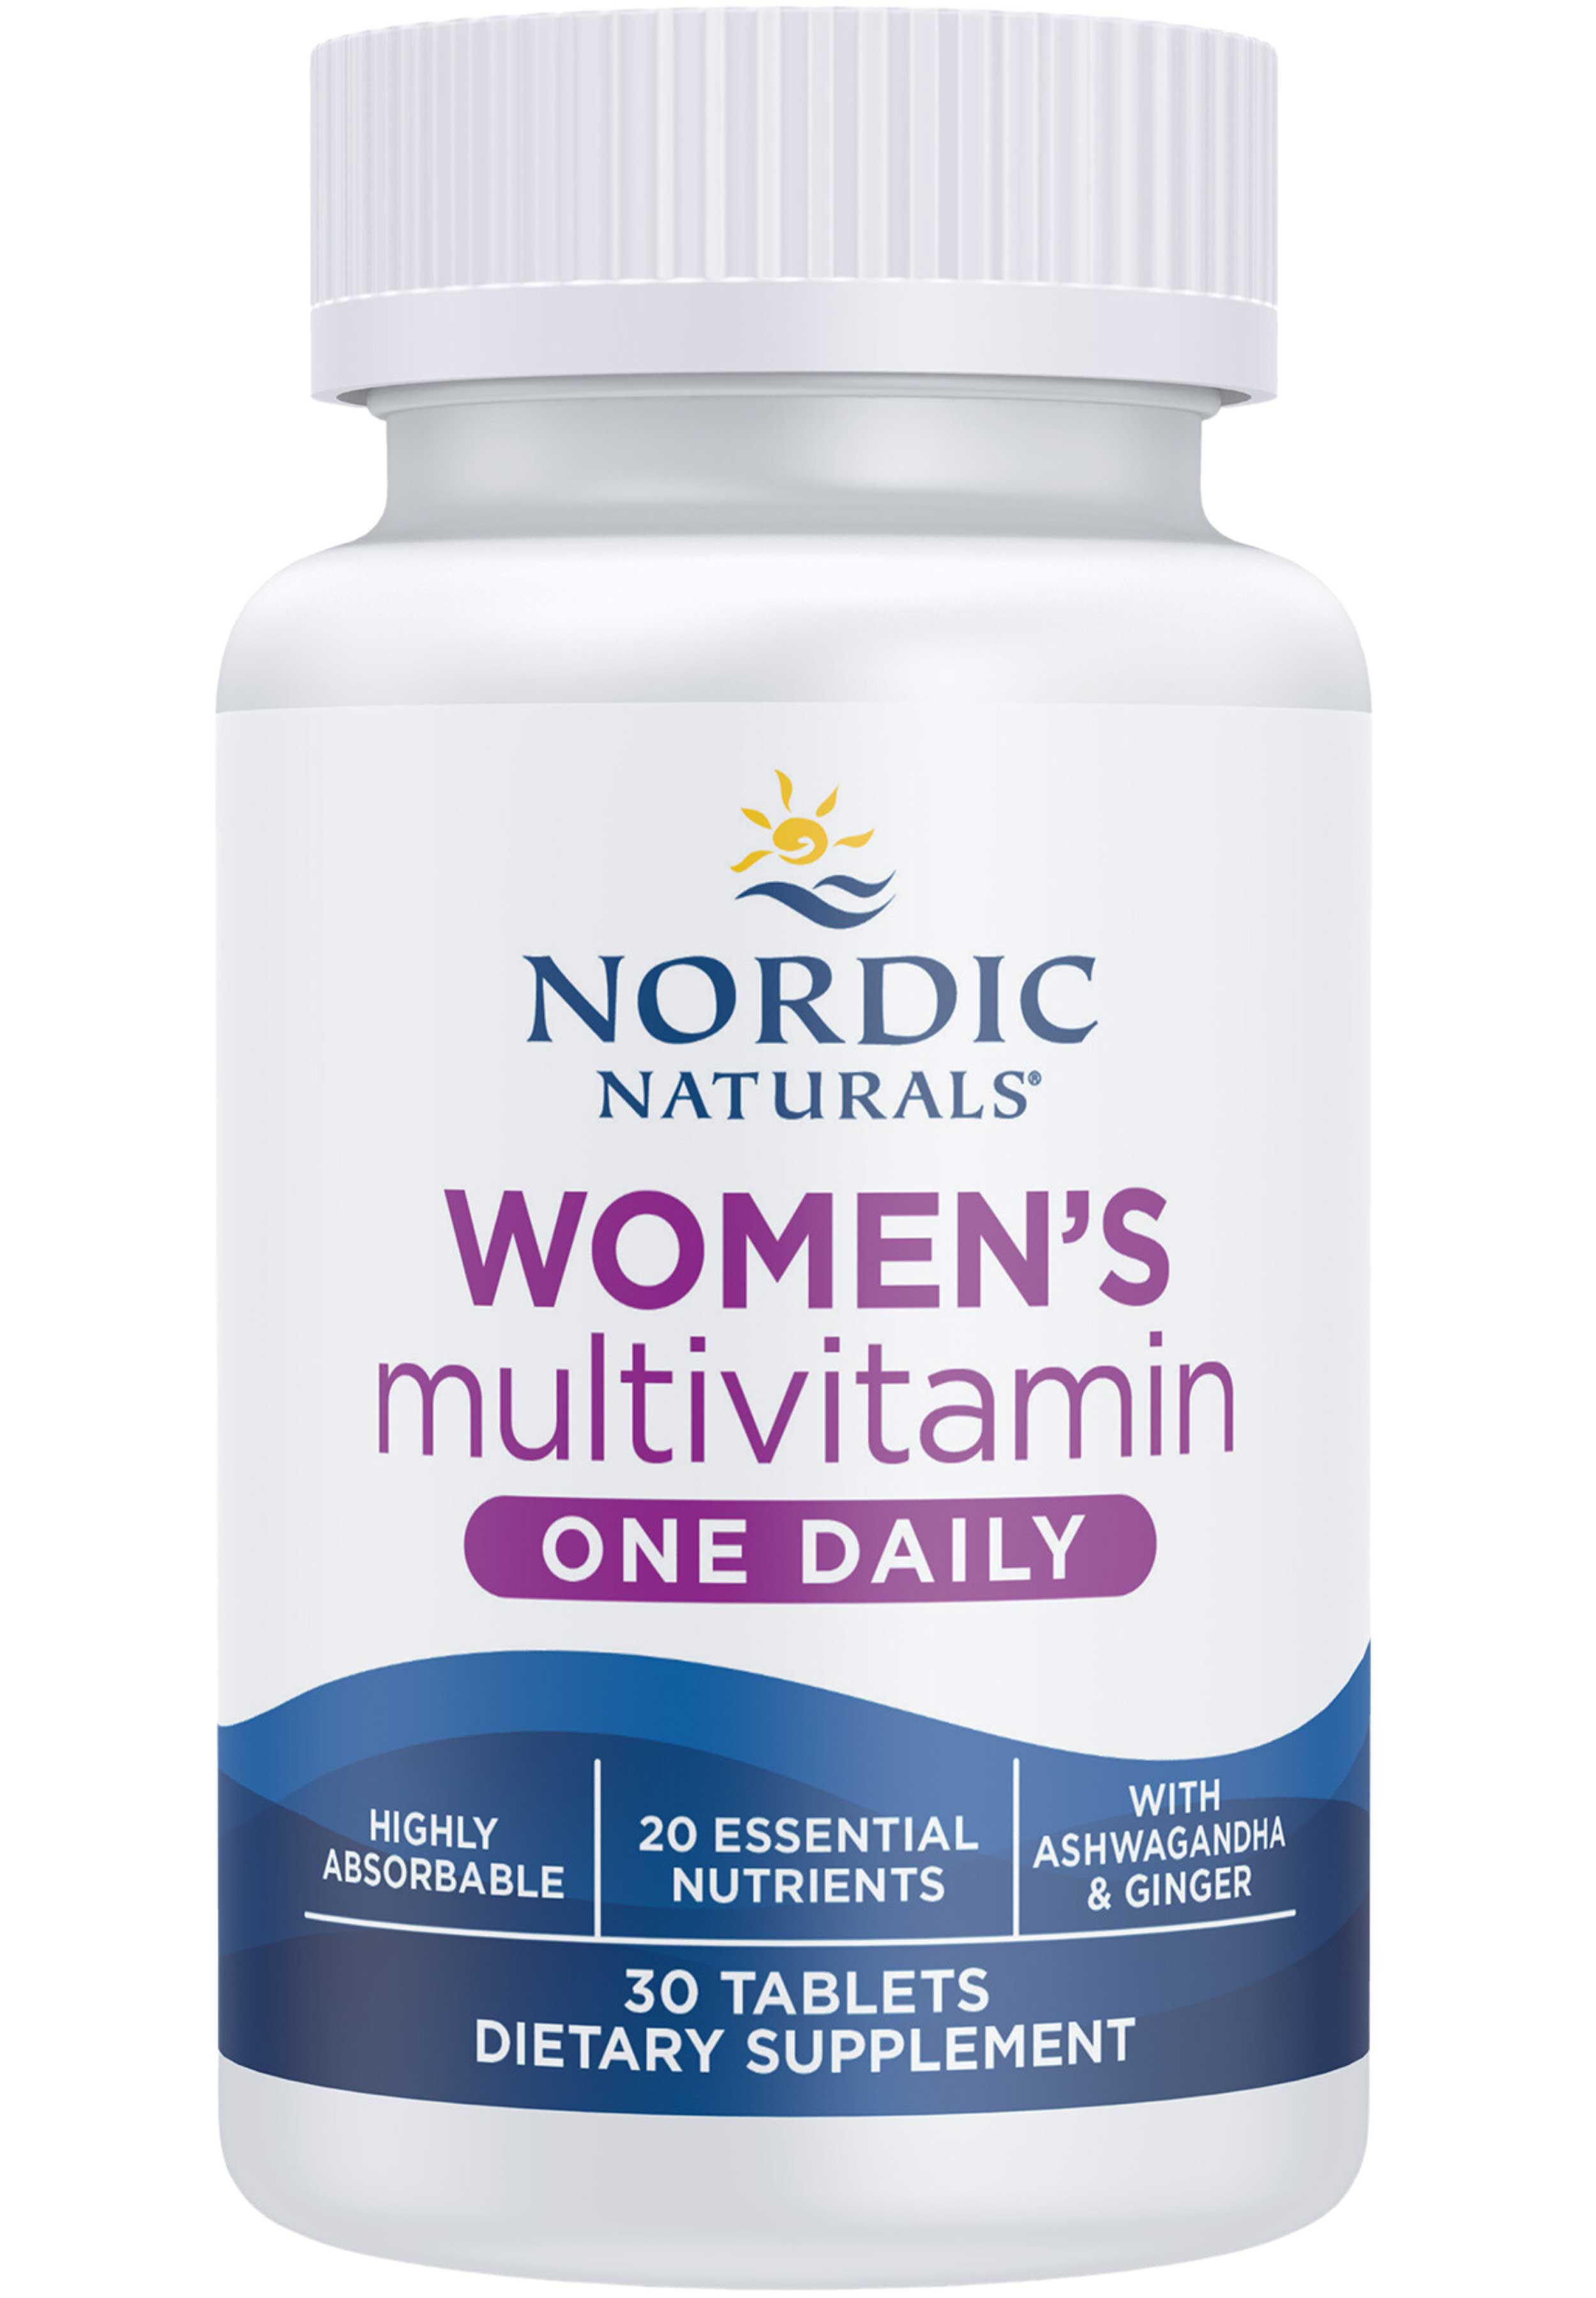 Nordic Naturals Women’s Multivitamin One Daily